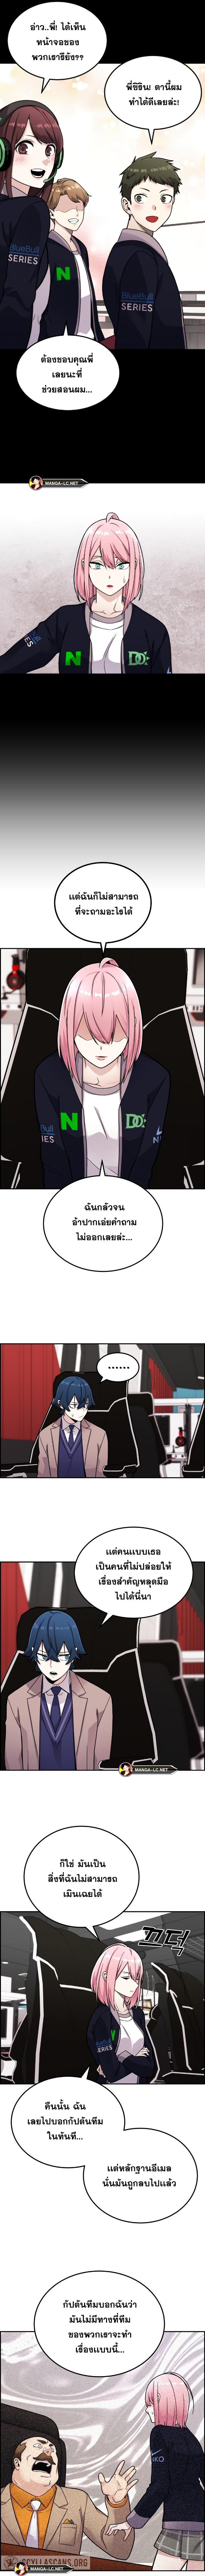 Webtoon Character Na Kang Lim ร ยธโ€ขร ยธยญร ยธโขร ยธโ€”ร ยธยตร ยนห 15 (3)